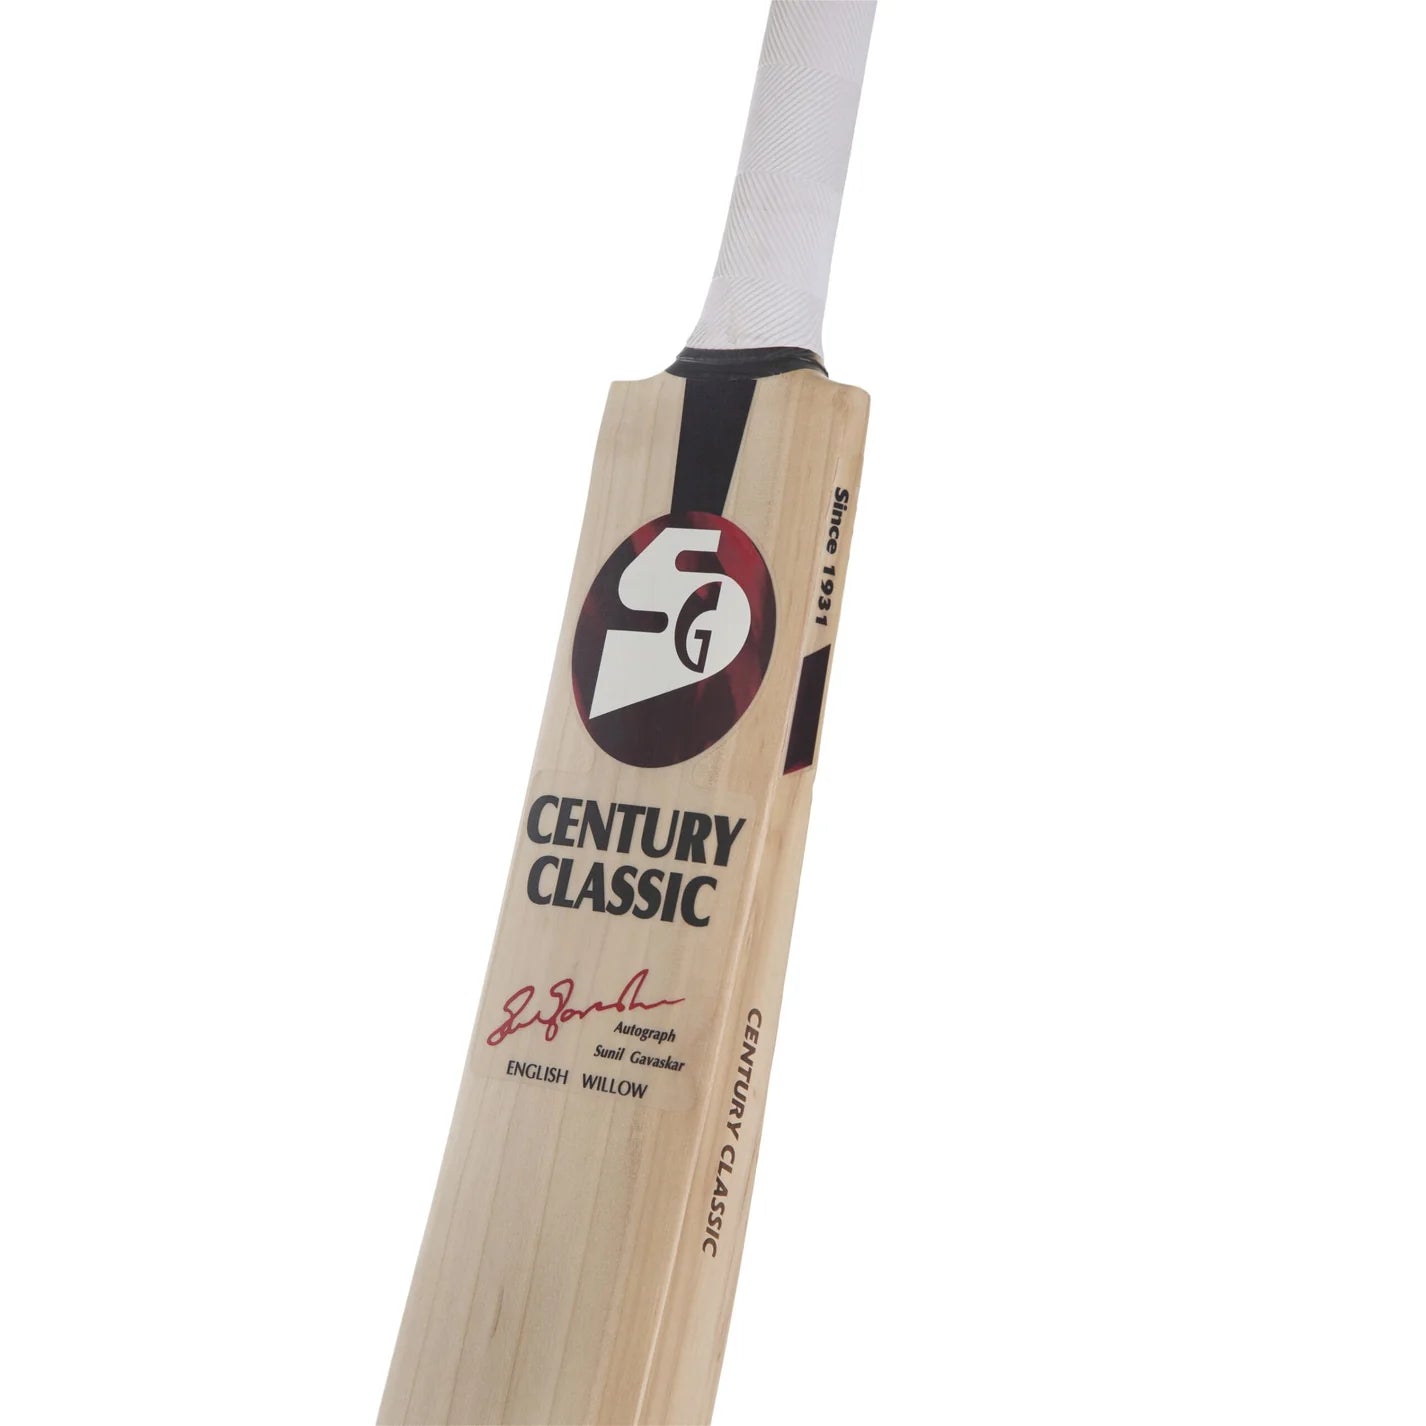 SG Century Classic Traditionally Shaped English Willow Cricket Bat